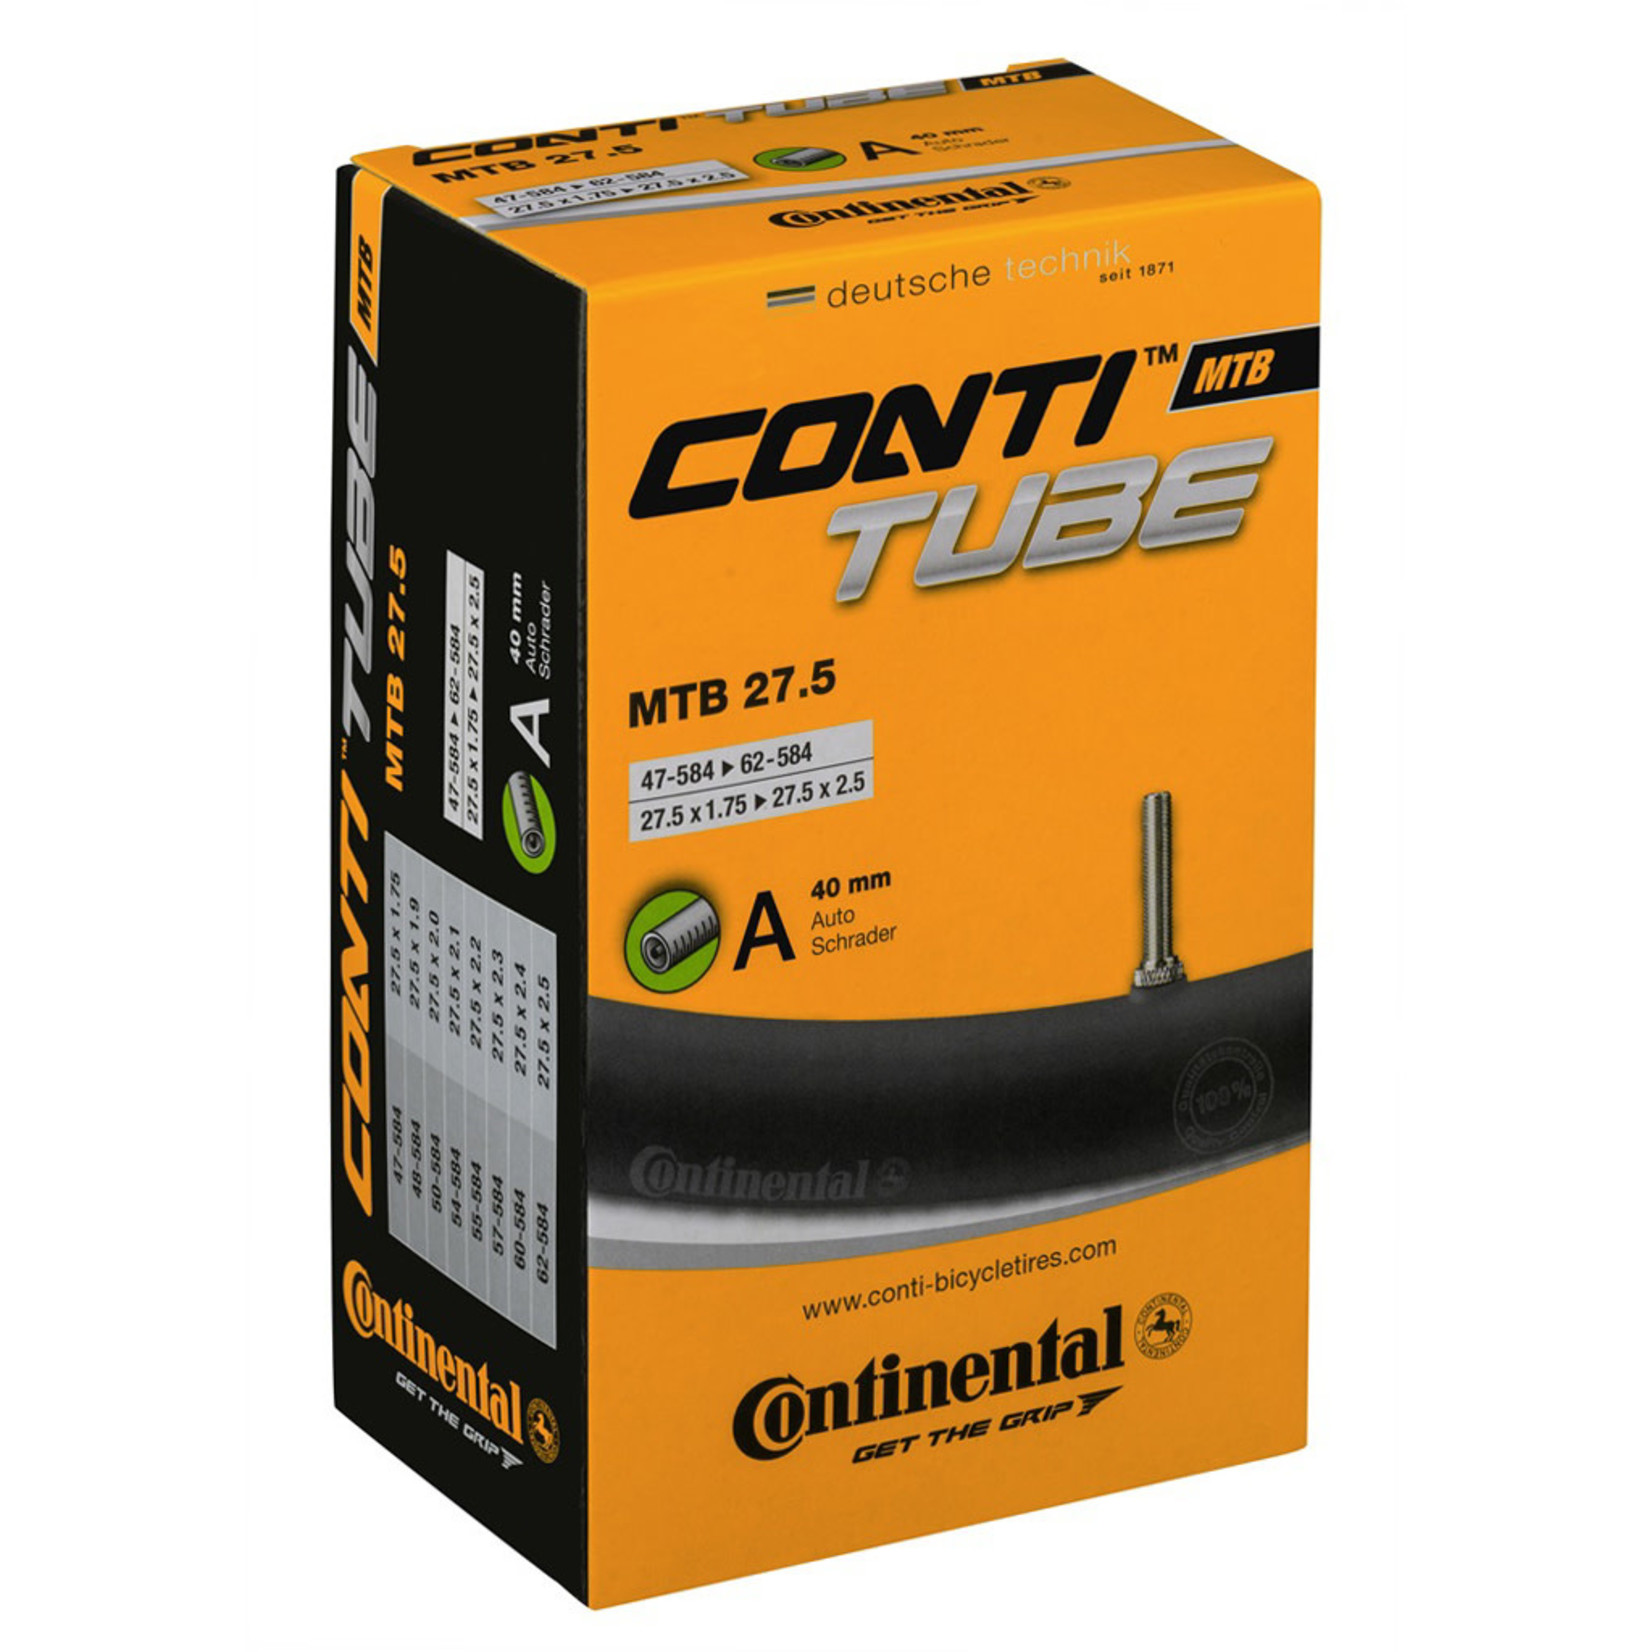 CONTINENTAL Continental 27.5" (584) x 1.75-2.5" Inner Tube, Schrader 40mm